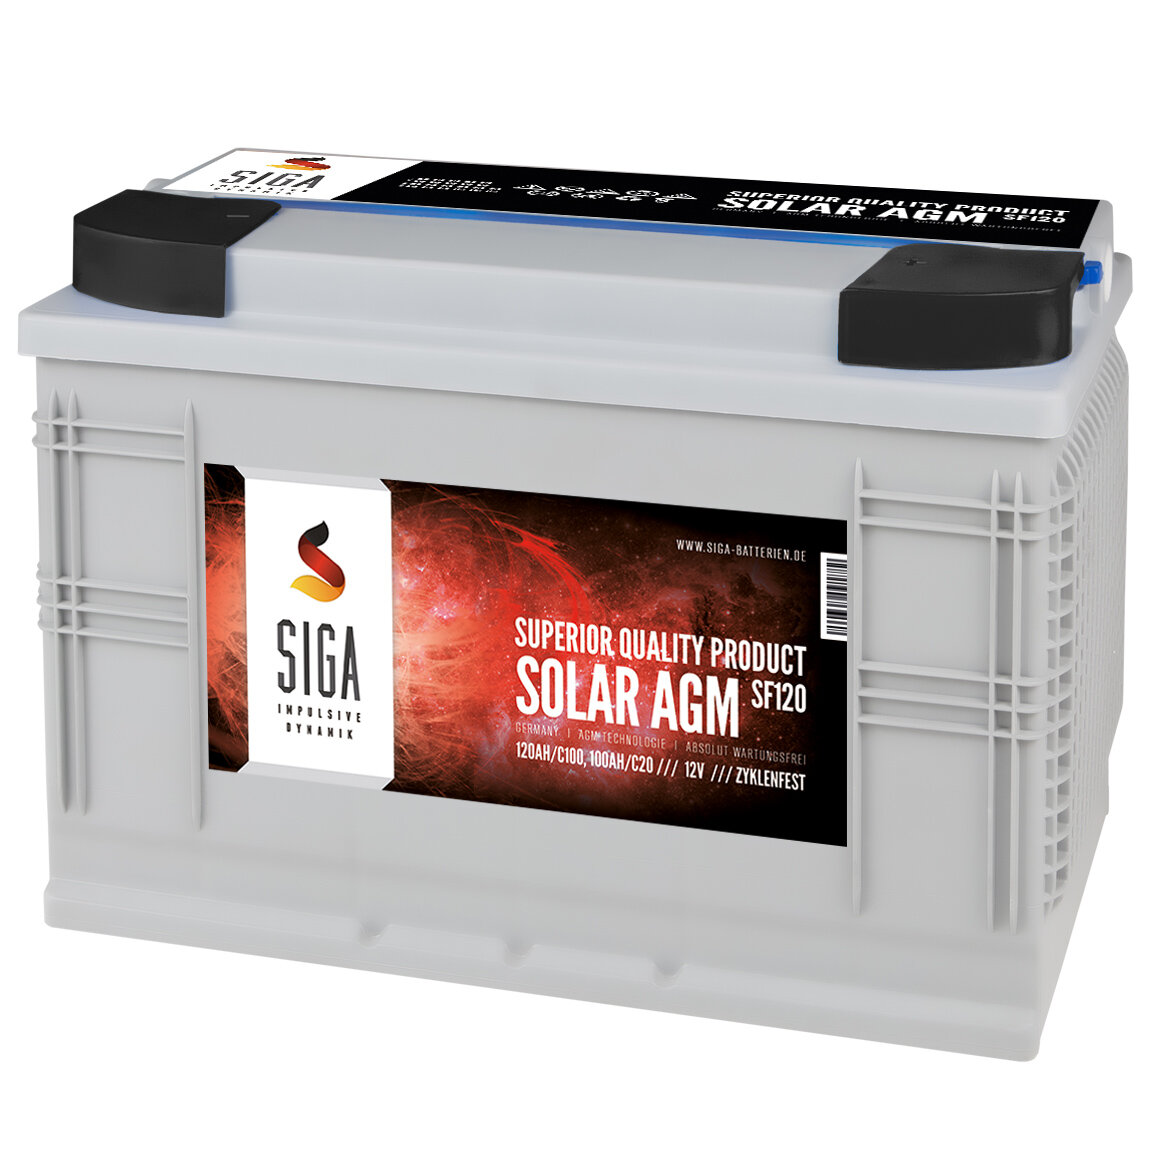 https://www.winnerbatterien.de/media/image/product/8776/lg/siga-solarbatterie-agm-120ah-12v.jpg